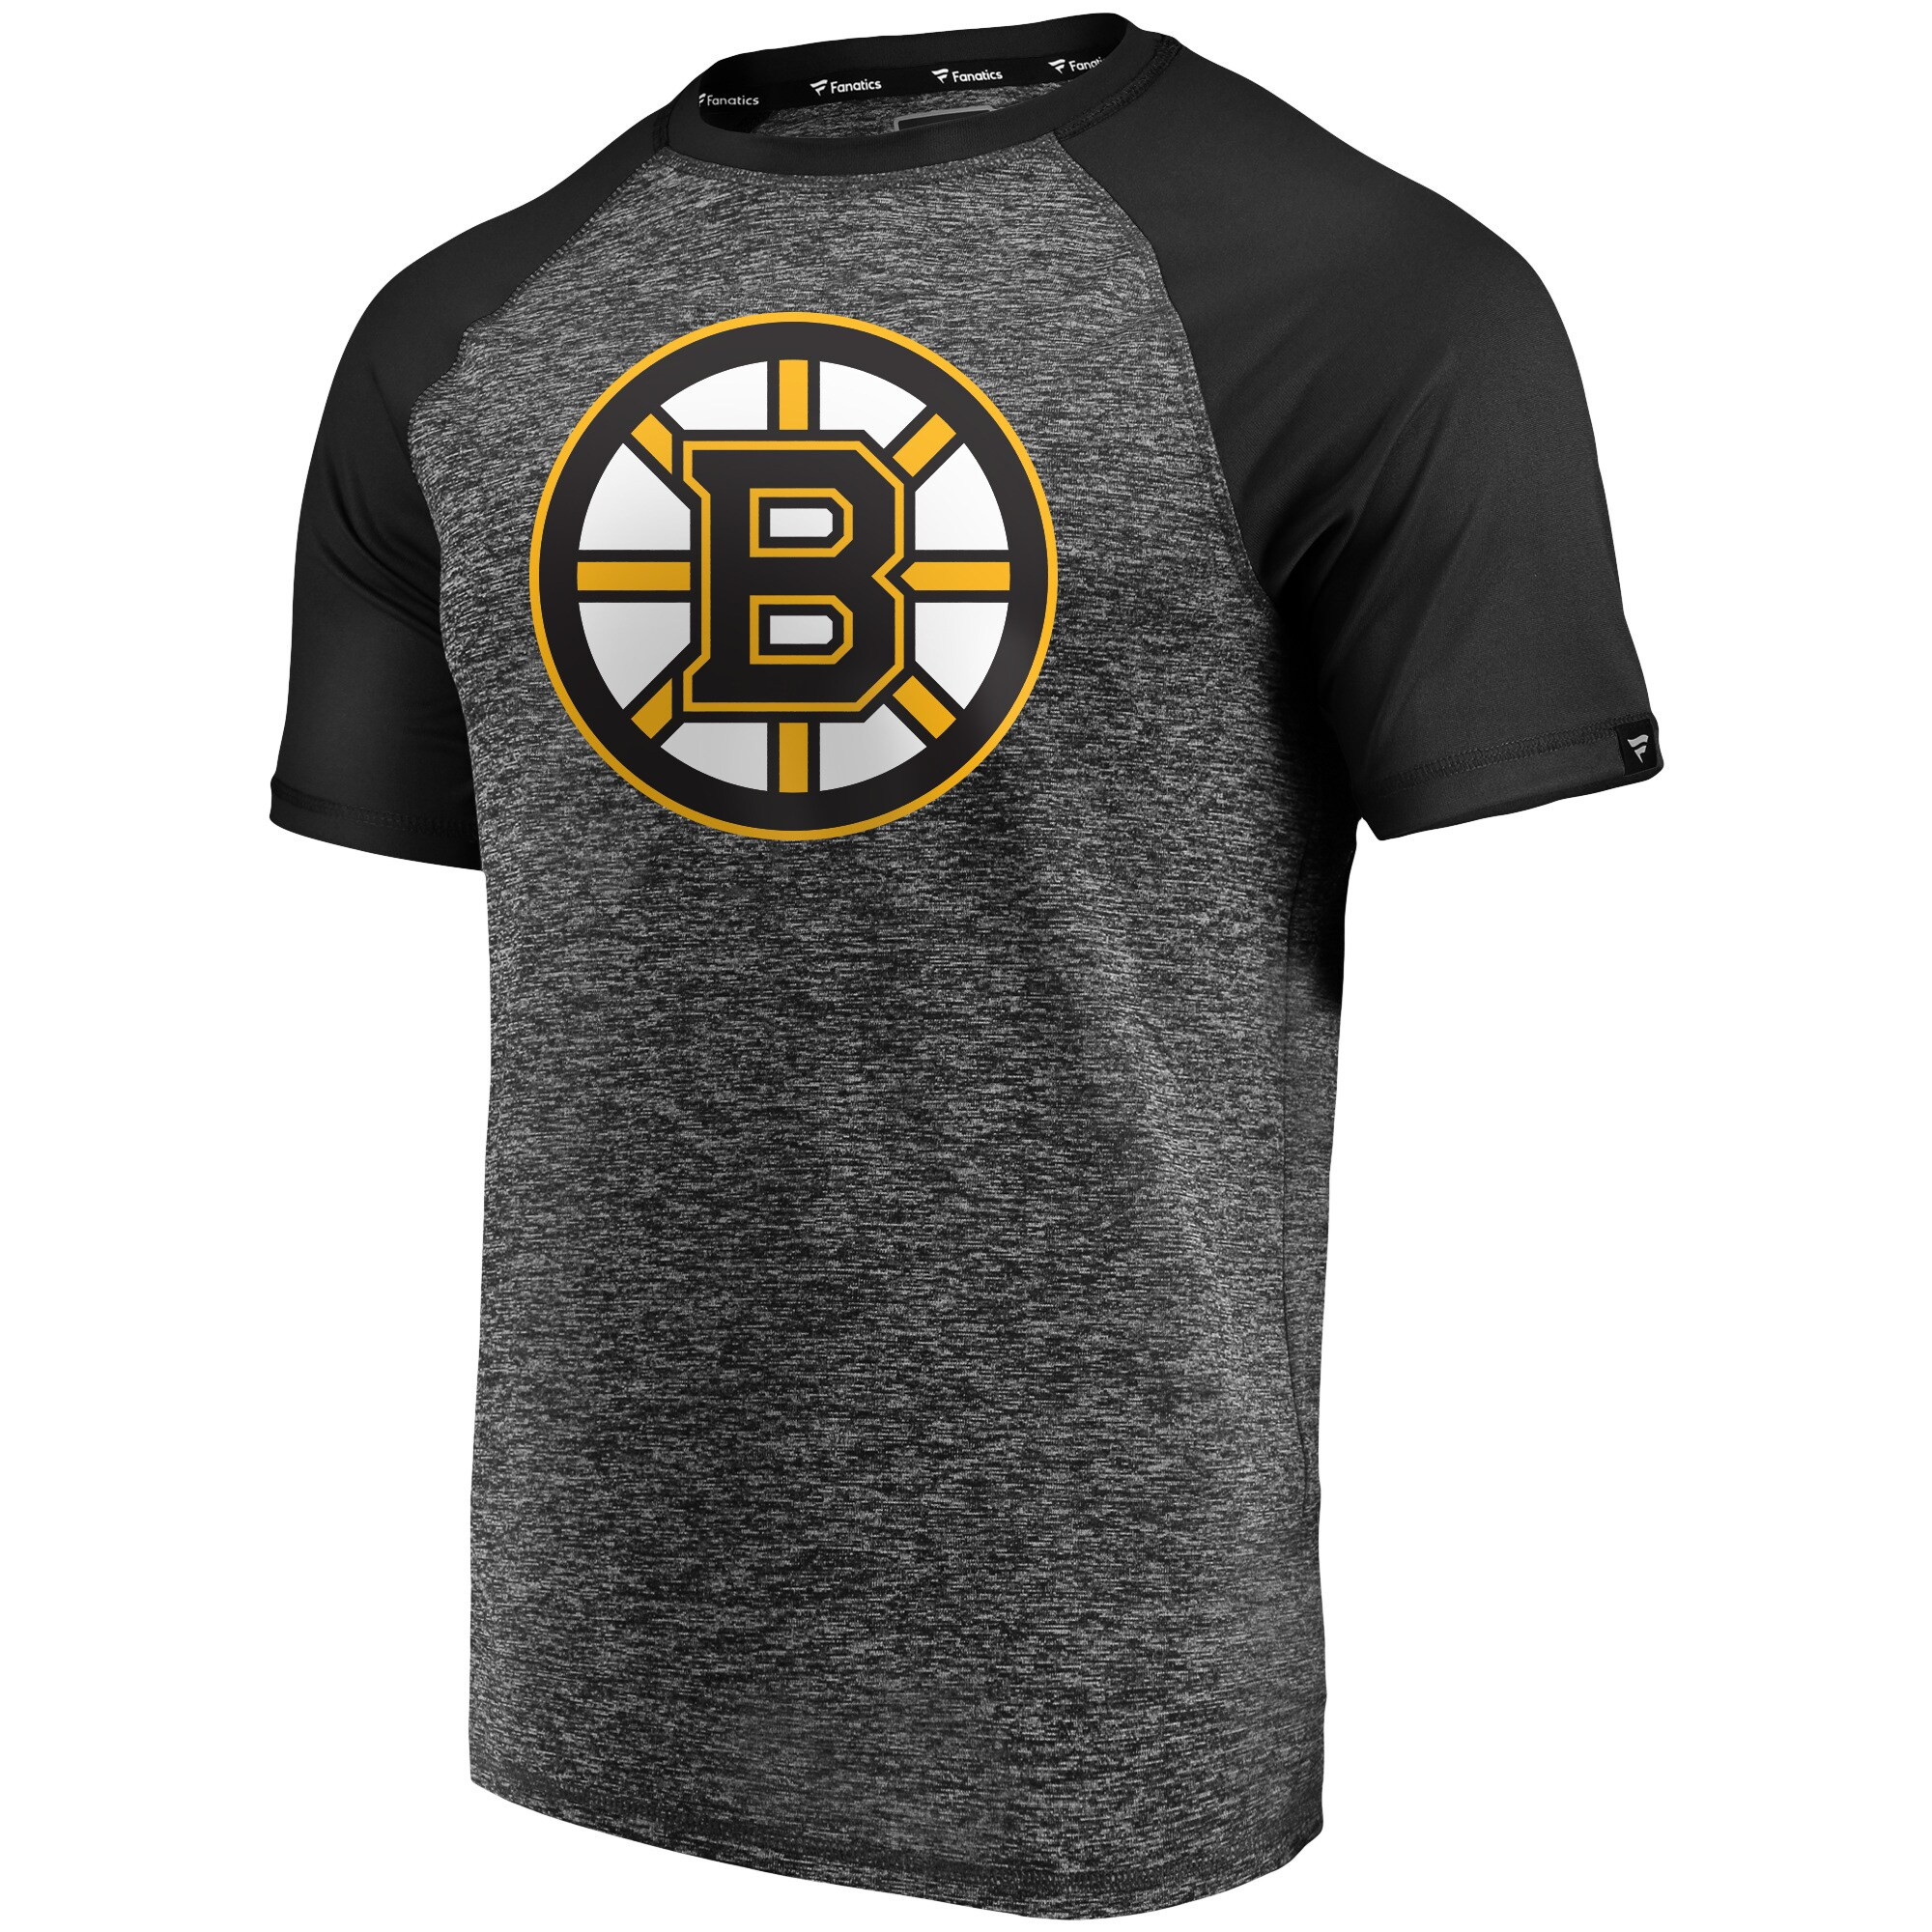 Men's Fanatics Branded Heathered Gray/Black Boston Bruins Static T-Shirt